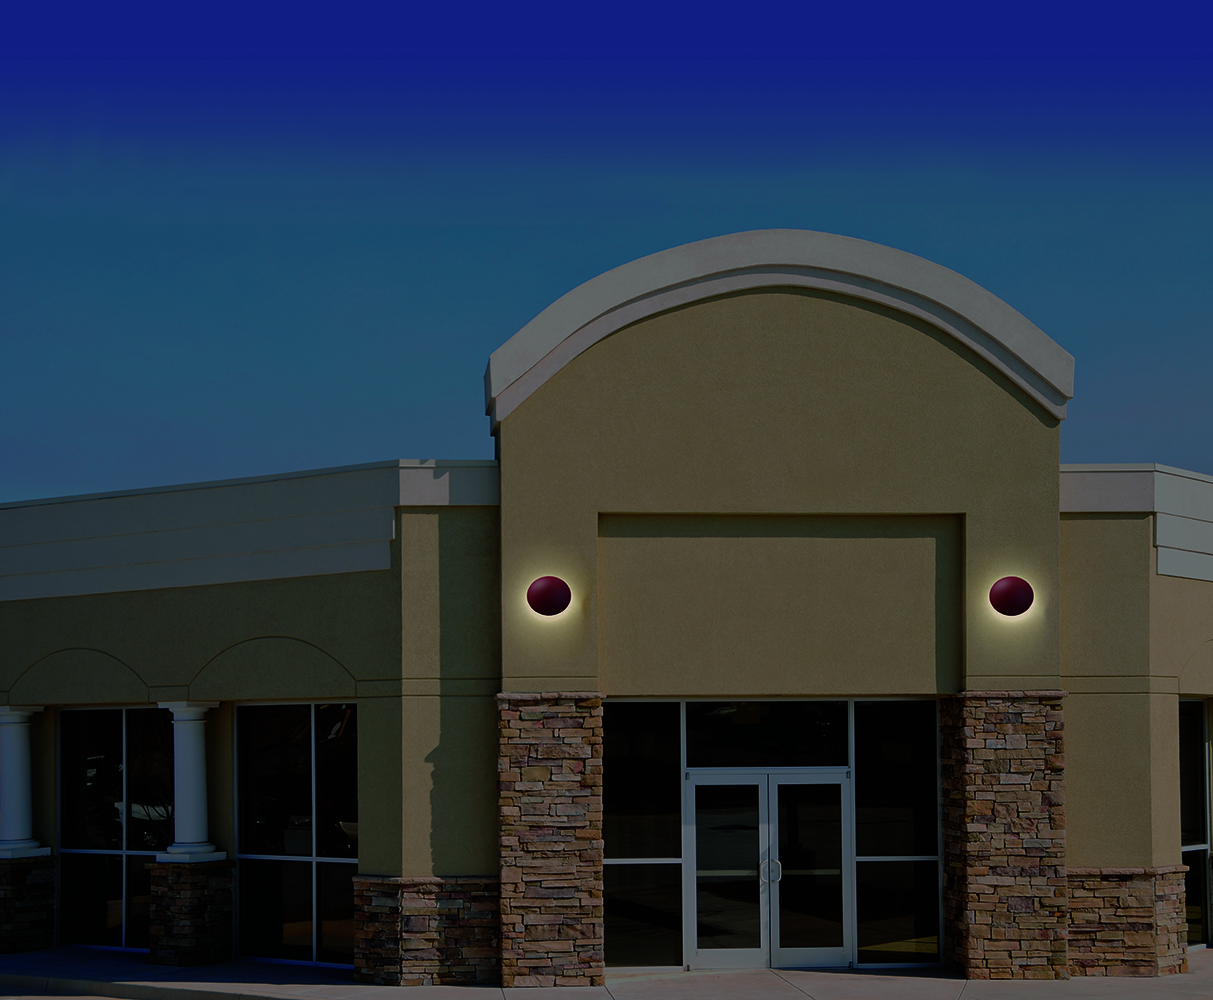 Northridge exterior lighting fixtures provide soft illumination on a commercial exterior entryway.